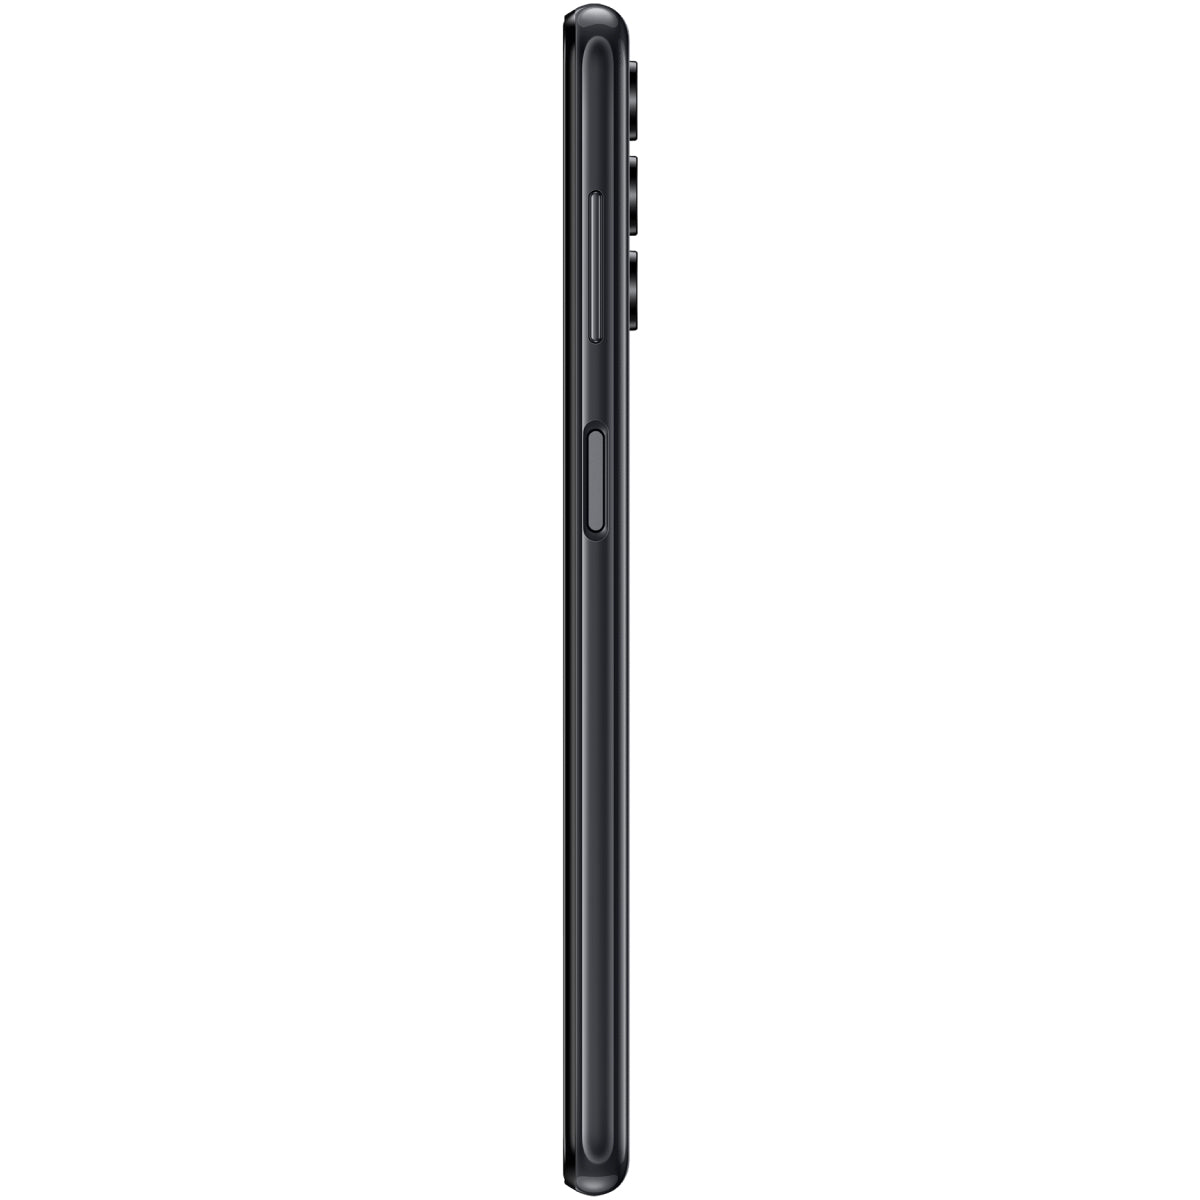 Optus Locked Samsung Galaxy A04s 64GB Dual-Sim Smartphone - Black